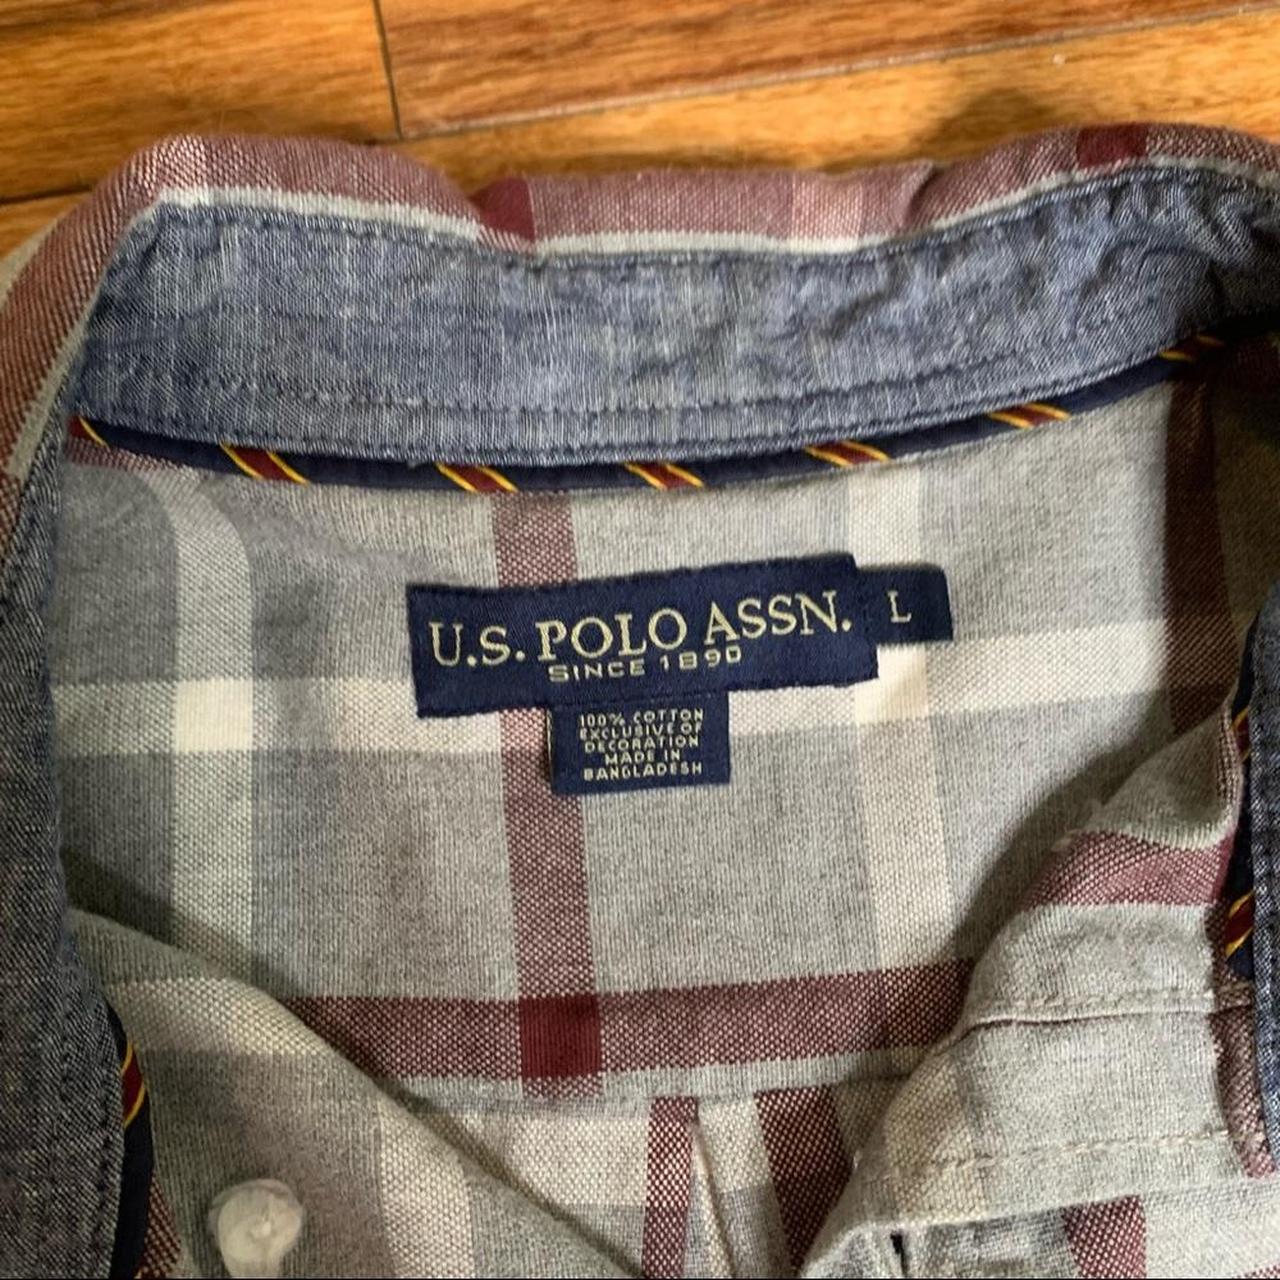 U.S. Polo Assn. Men's Grey and Burgundy Shirt (2)